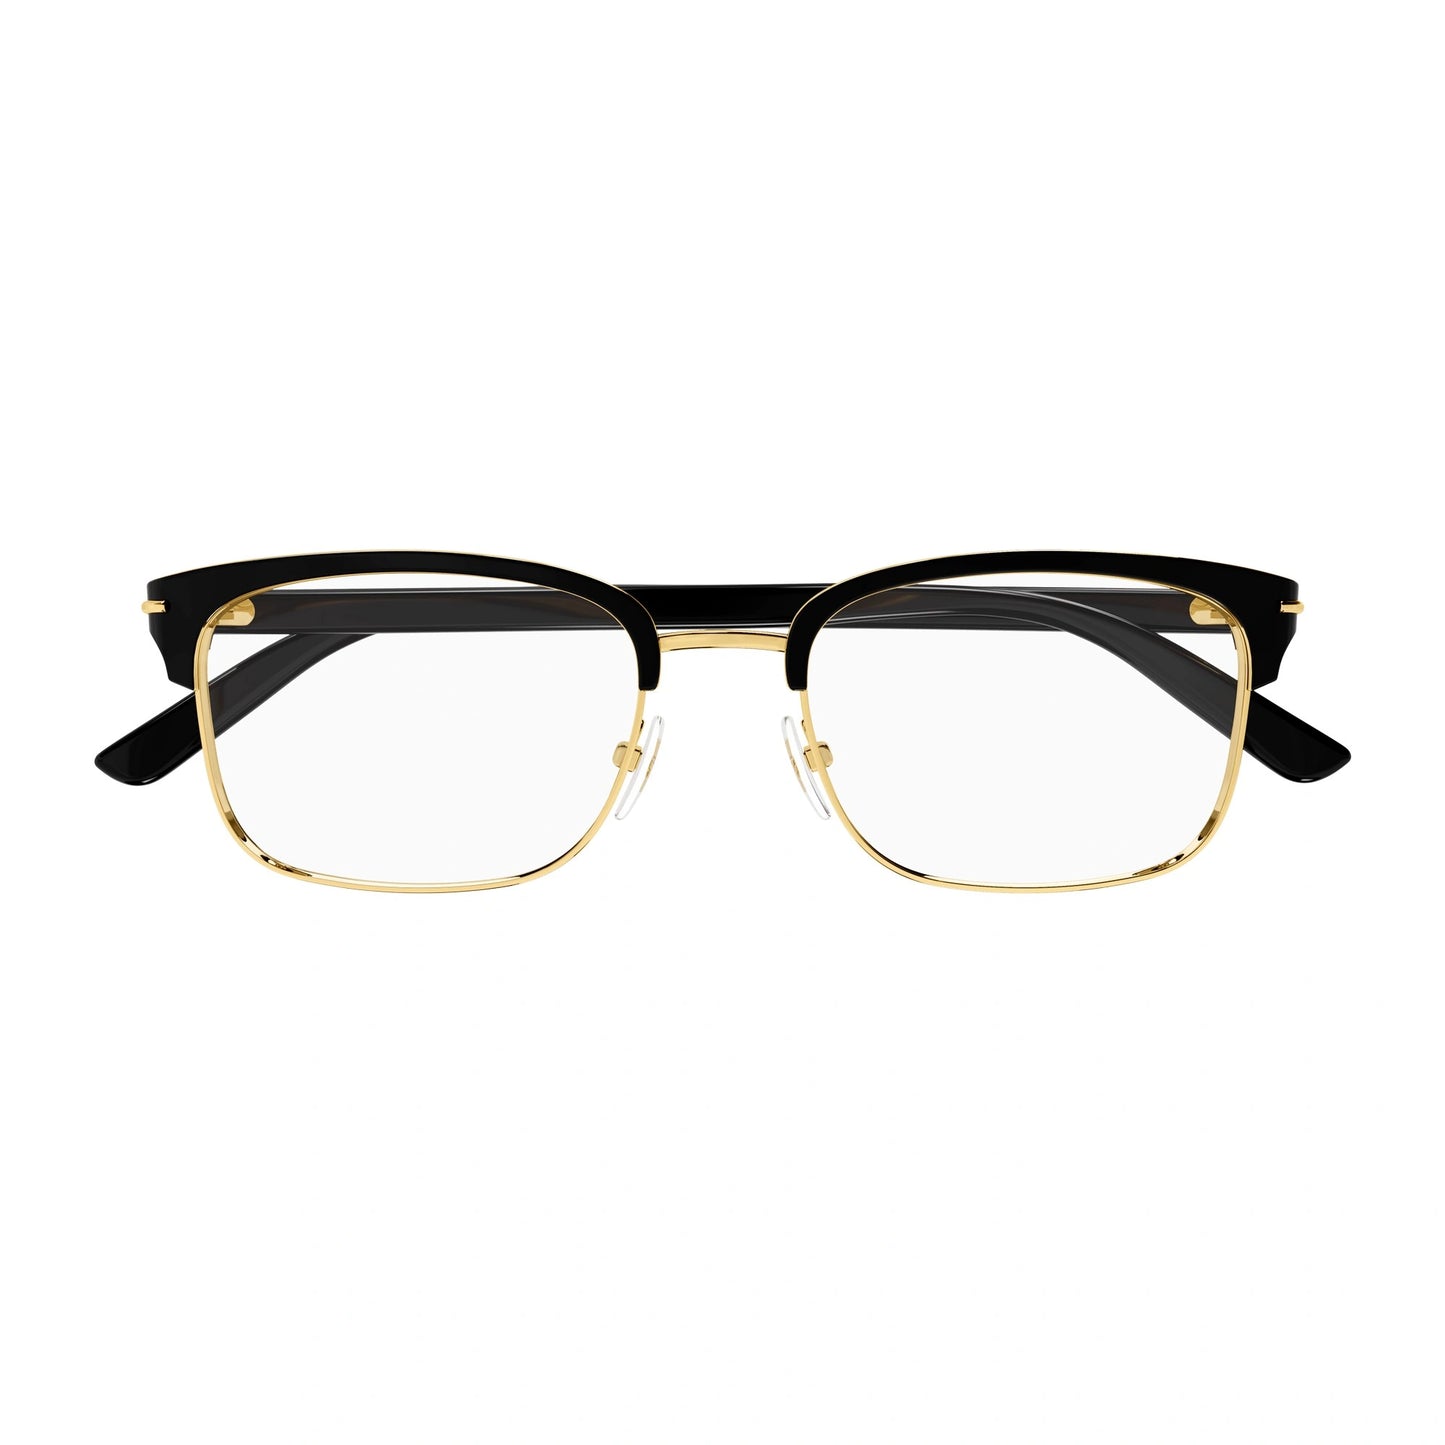 Gucci GG1448o-001 56mm New Eyeglasses